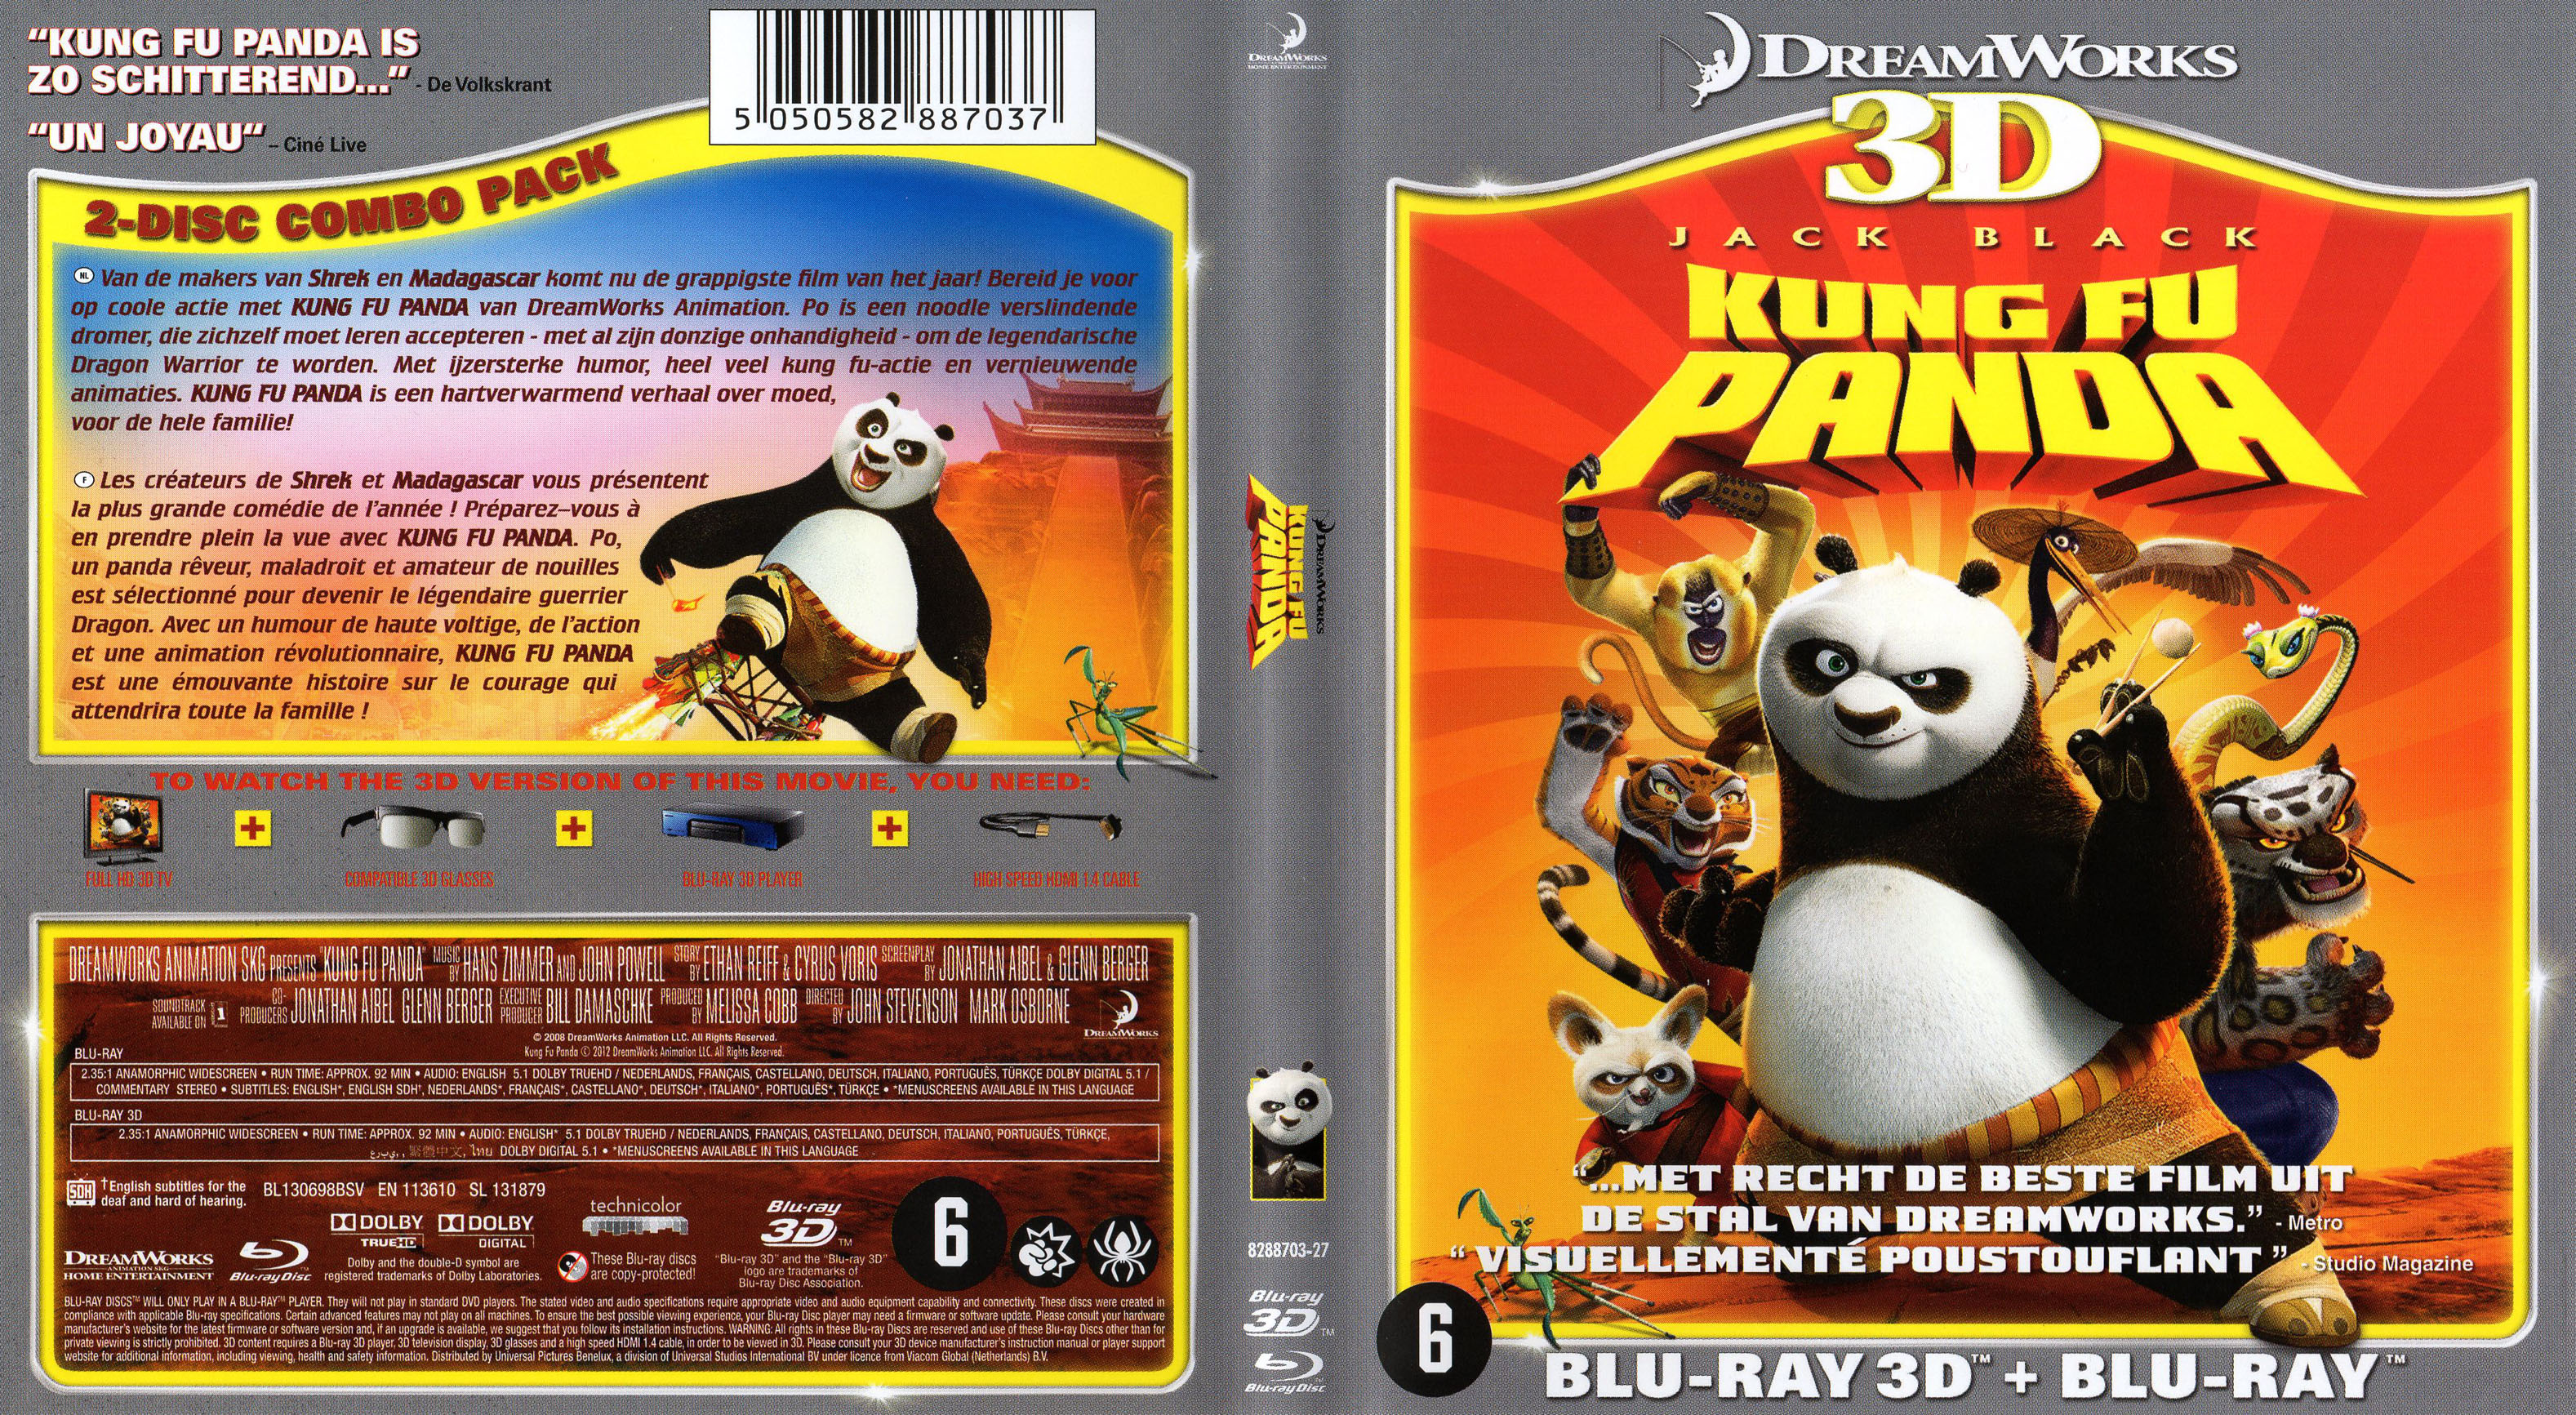 Jaquette DVD Kung Fu Panda 3D (BLU-RAY)